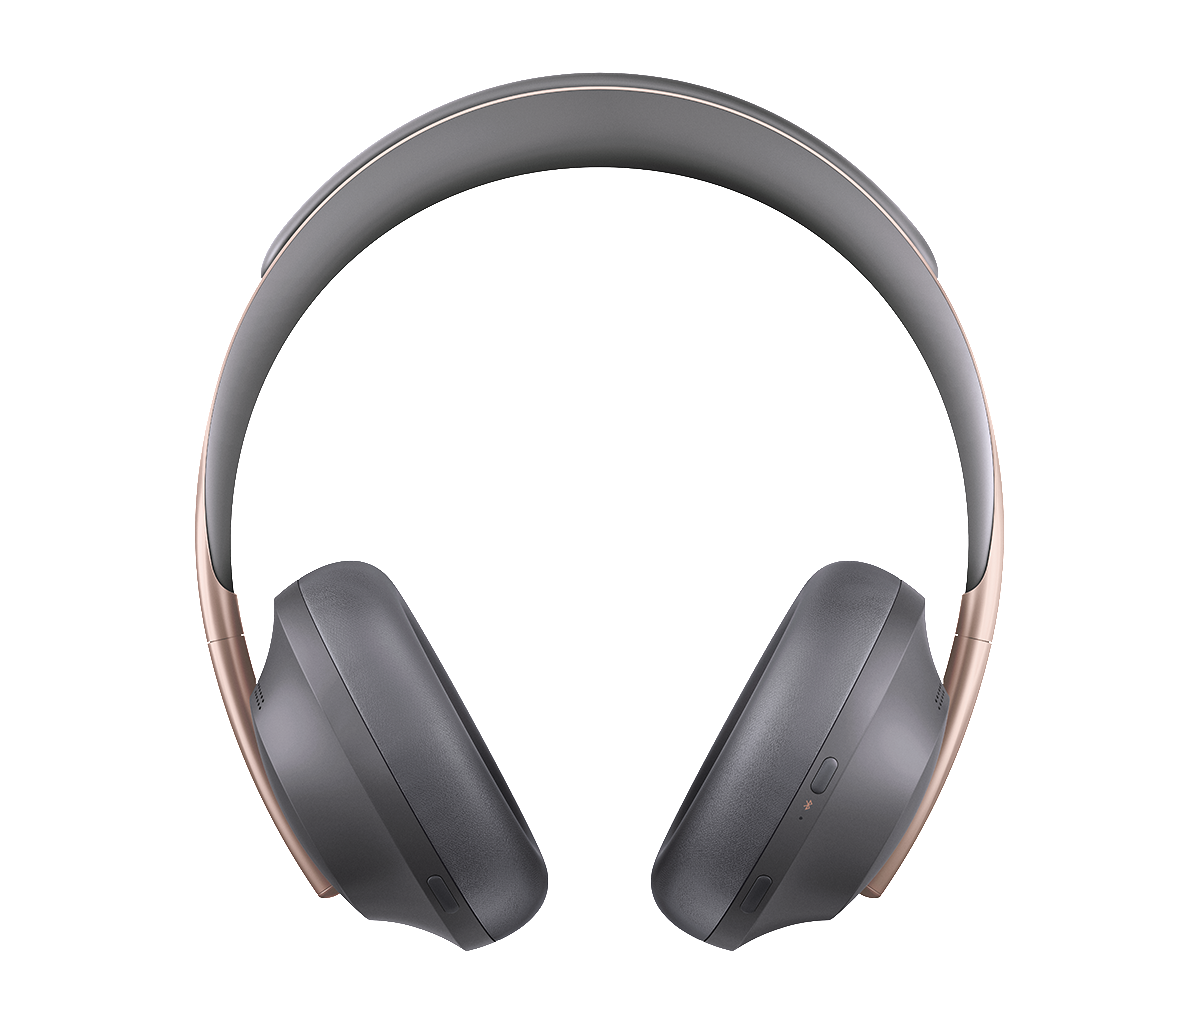 Bose Noise Cancelling Headphones Produkt Support Von Bose